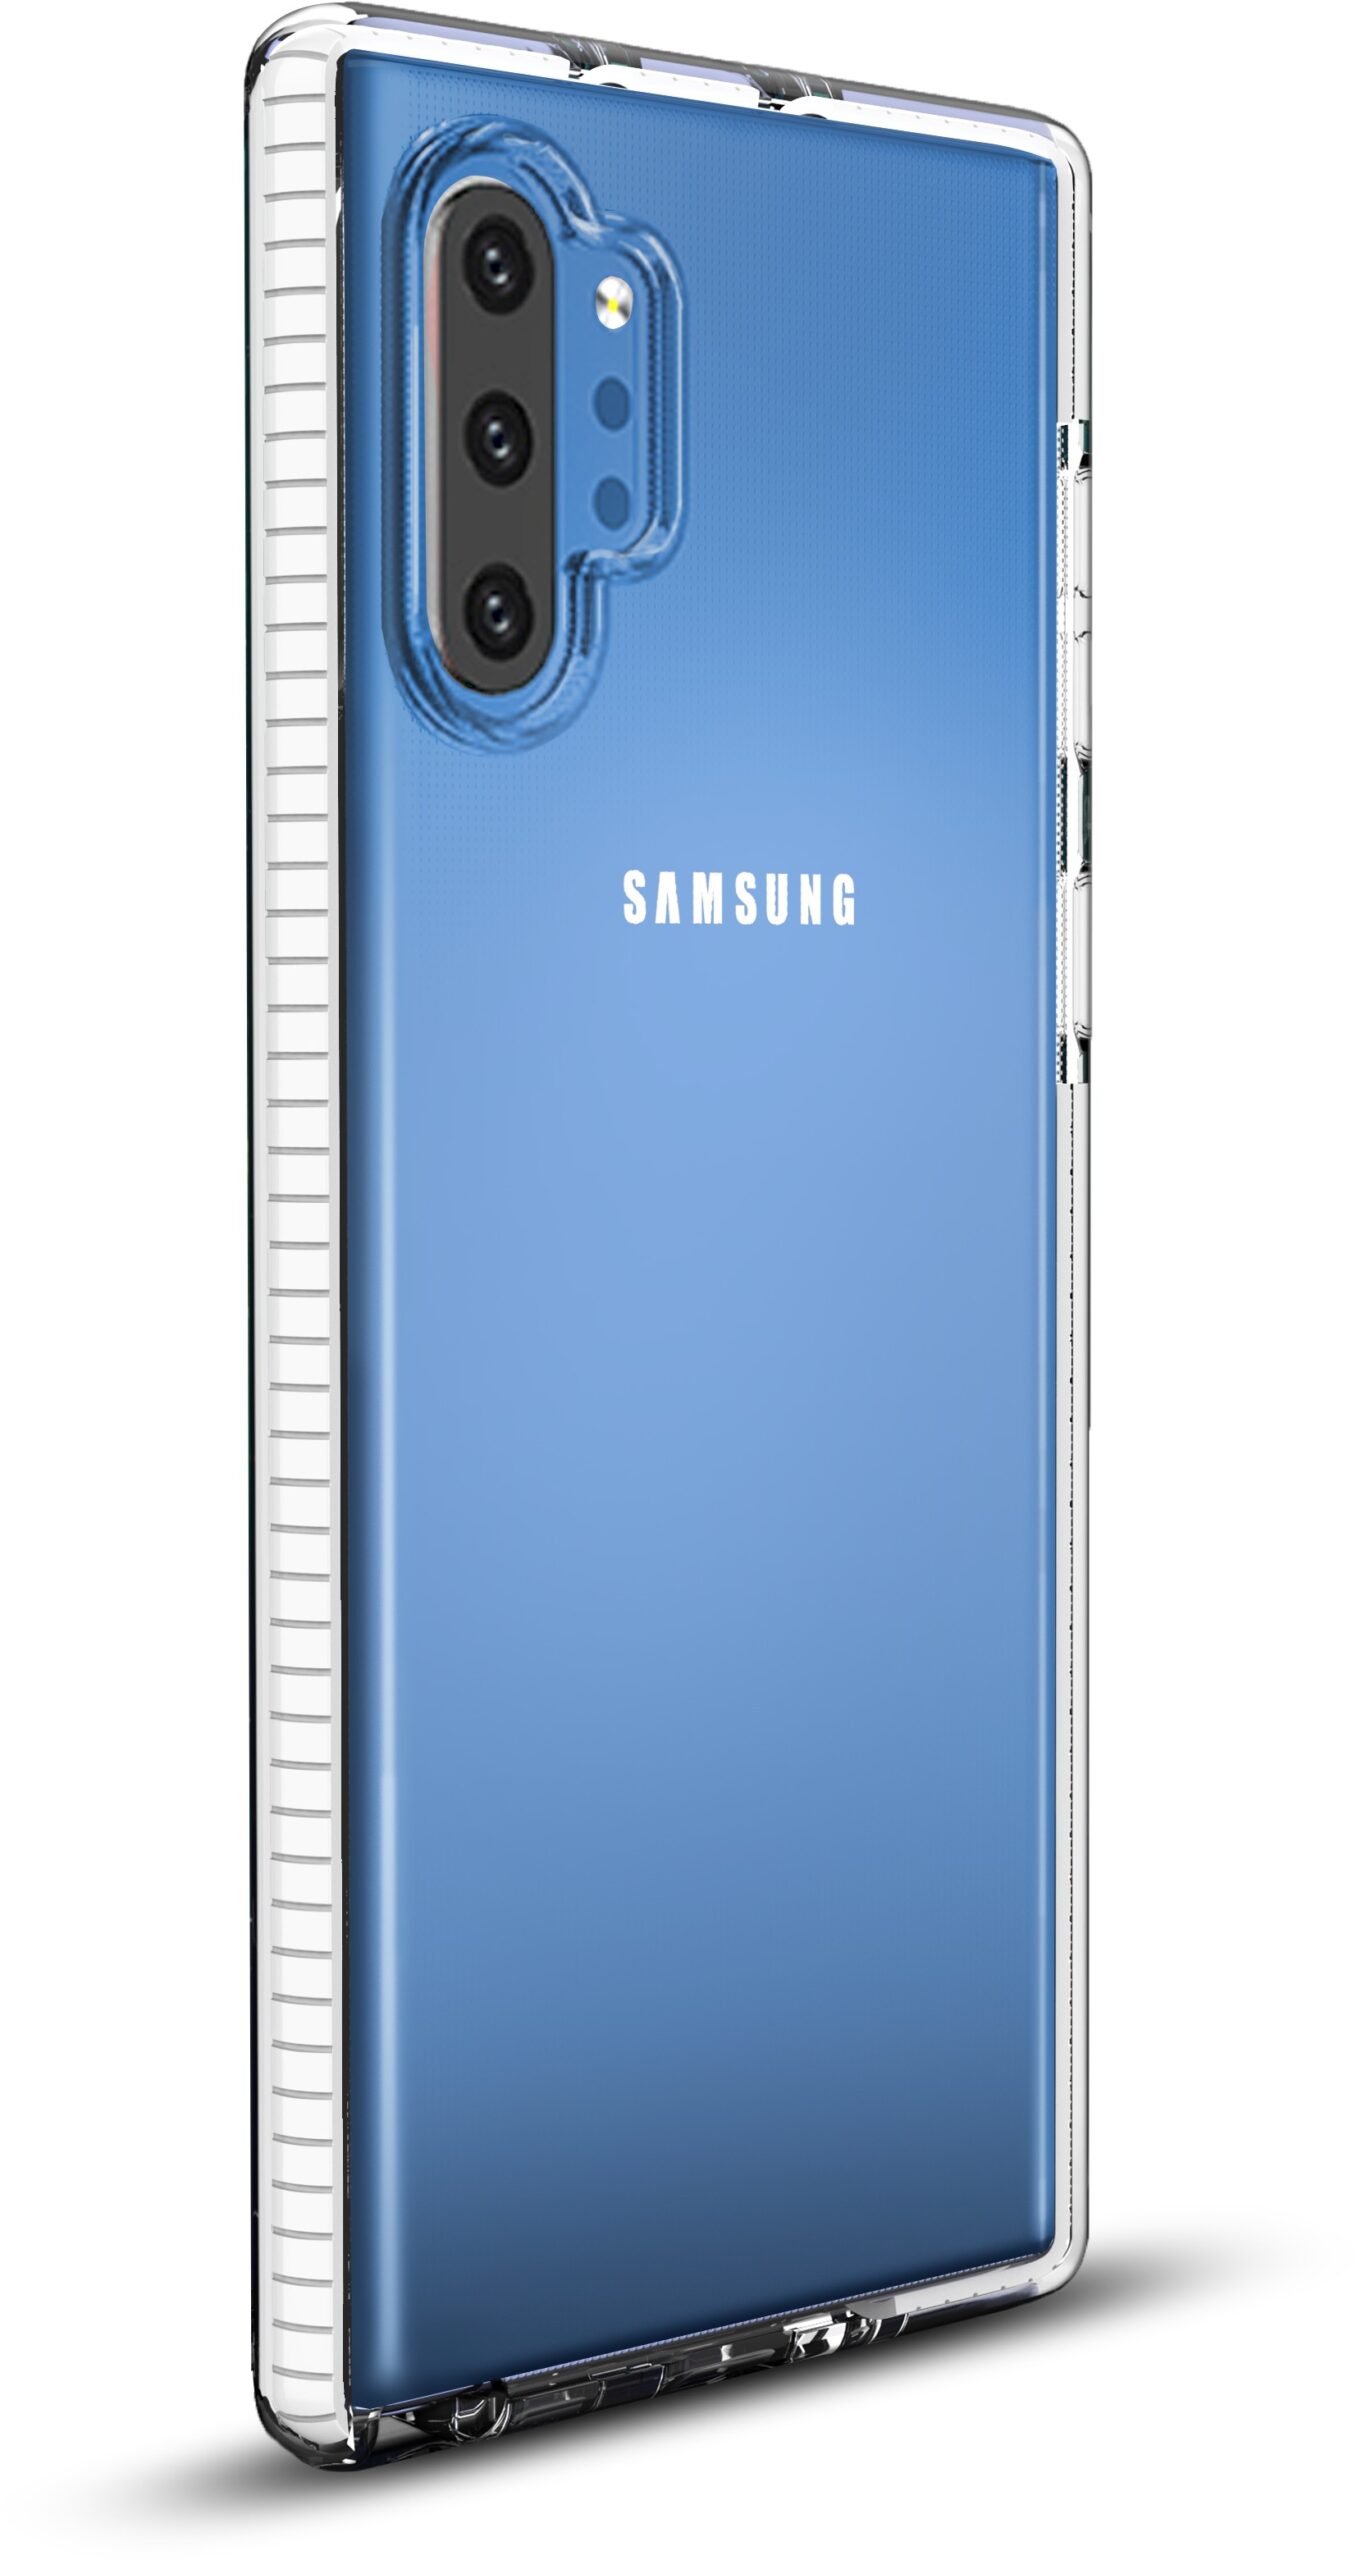 Base BorderLine - Dual Border Impact Protection For Samsung Note 10 Plus -White